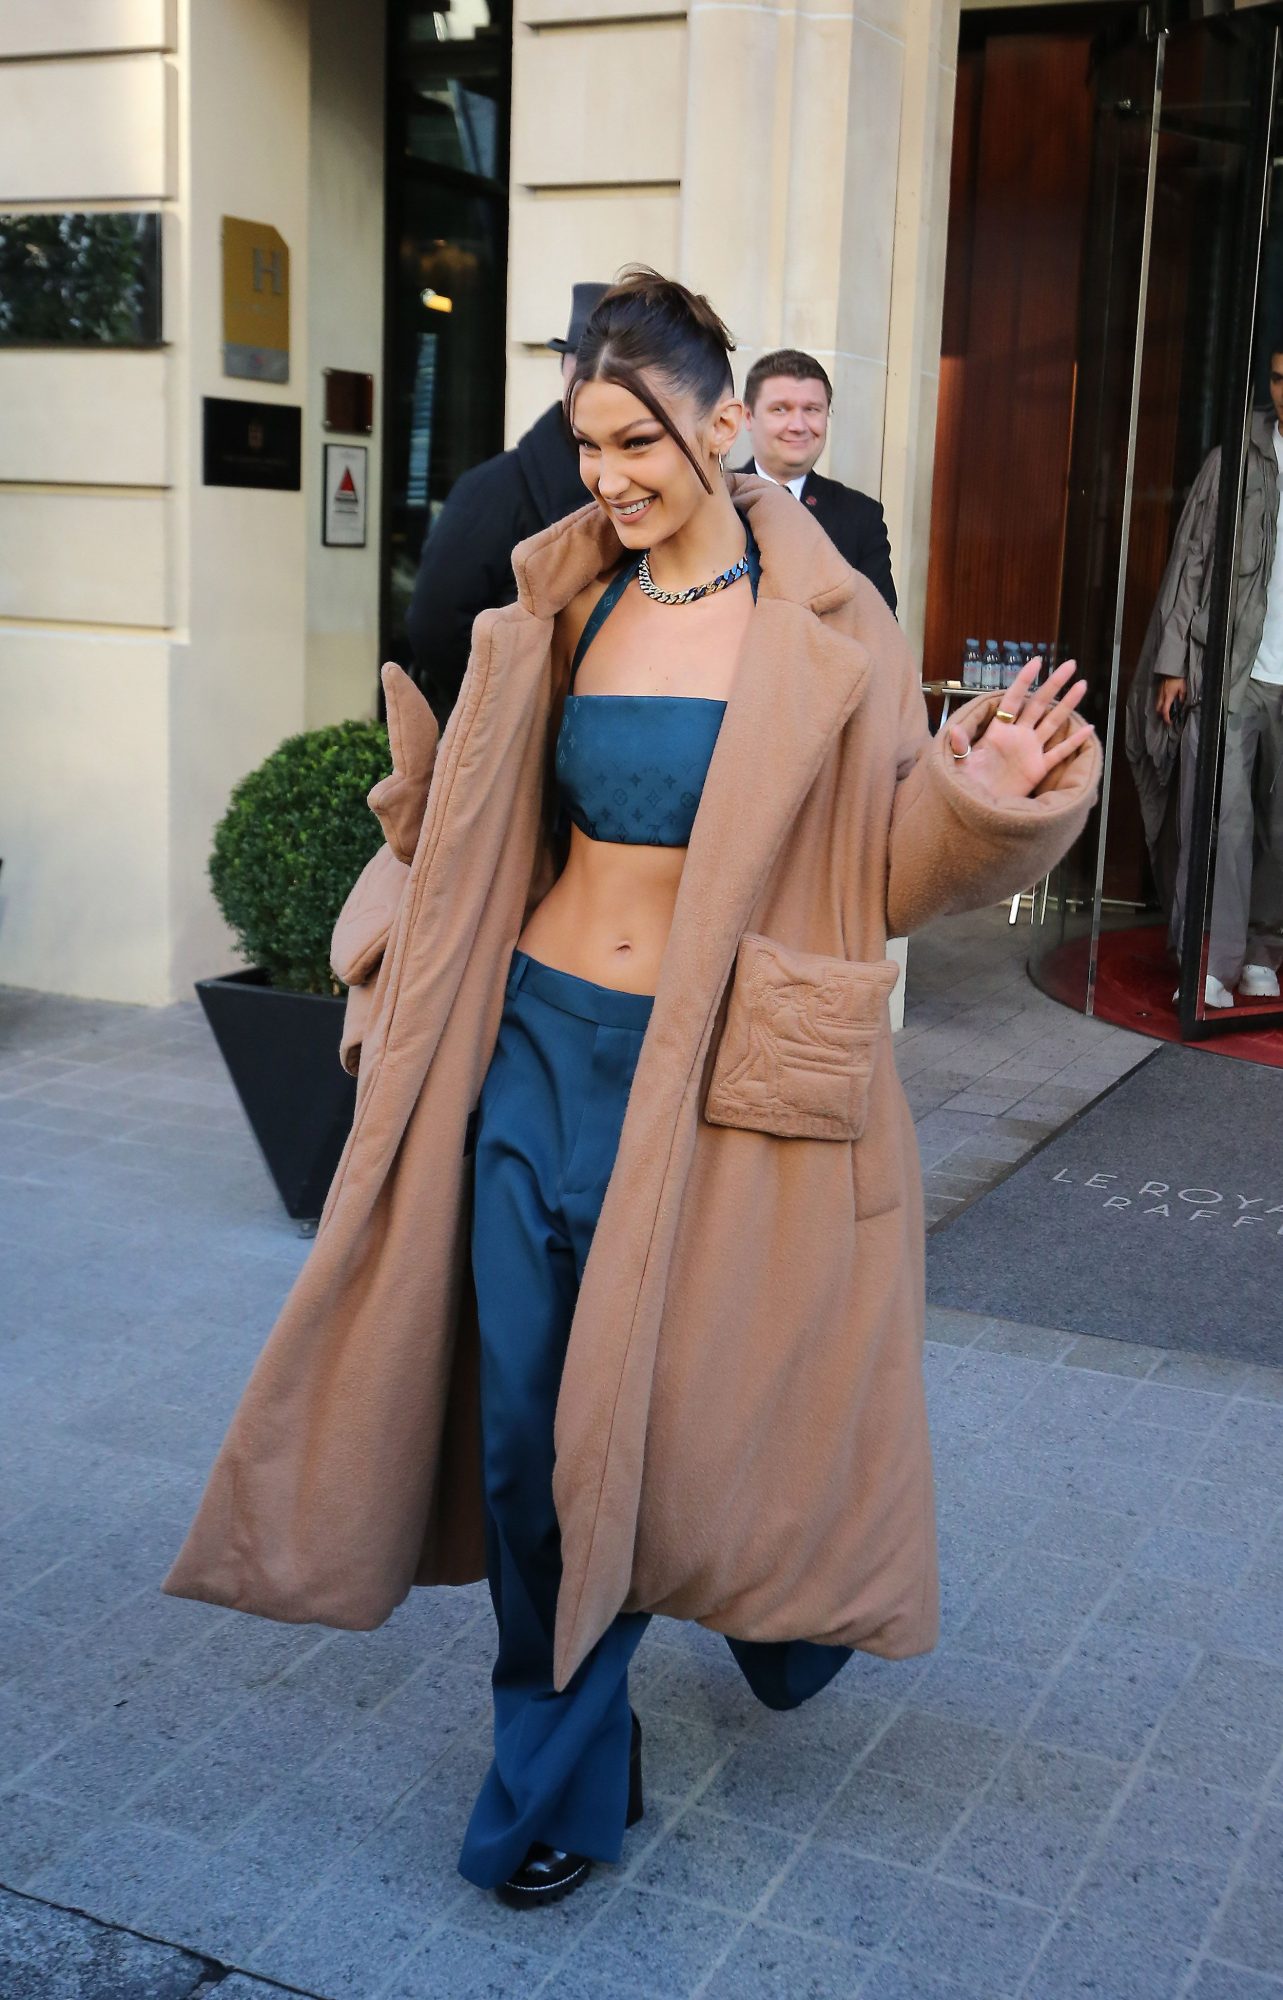 Bella Hadid attends the Louis Vuitton Menswear Fall/Winter 2020